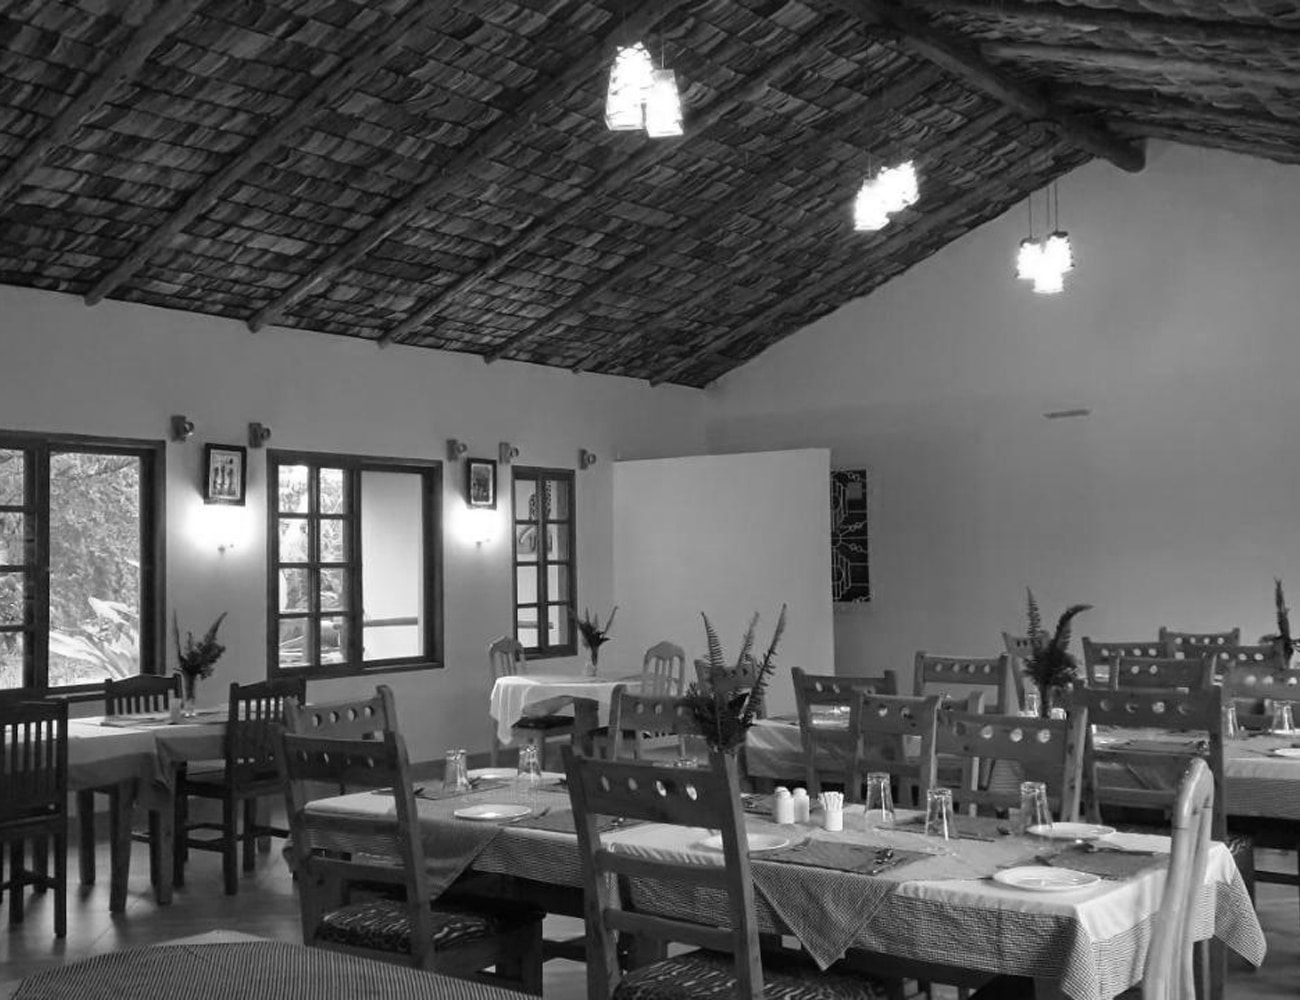 Dining Space at Meru View Lodge